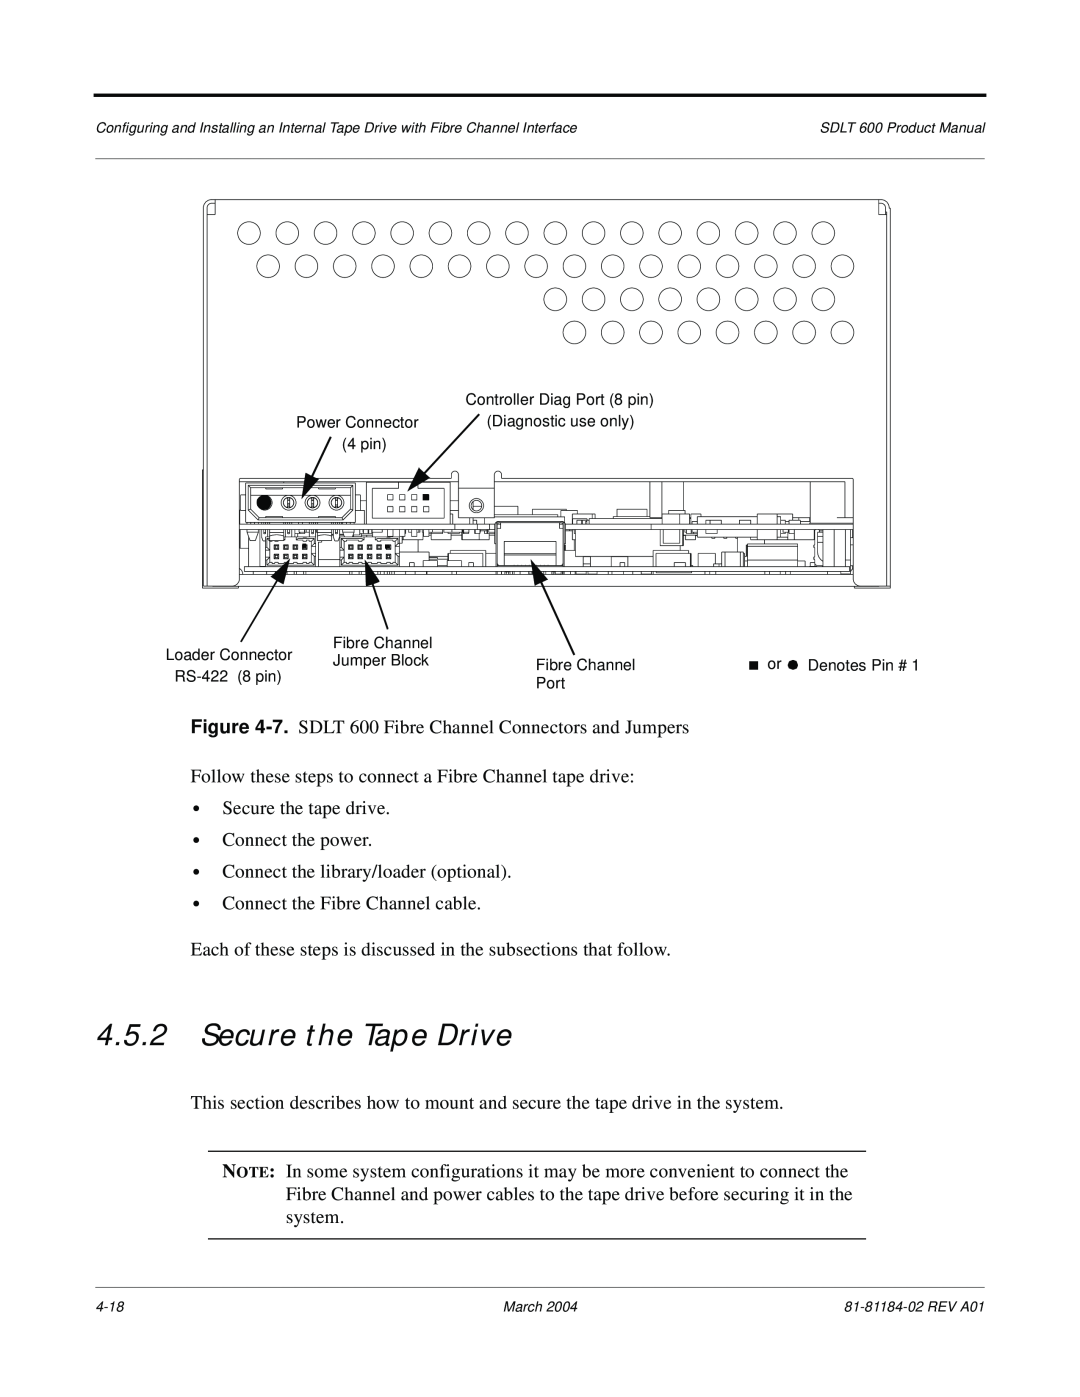 Tandberg Data 600 manual Secure the Tape Drive 